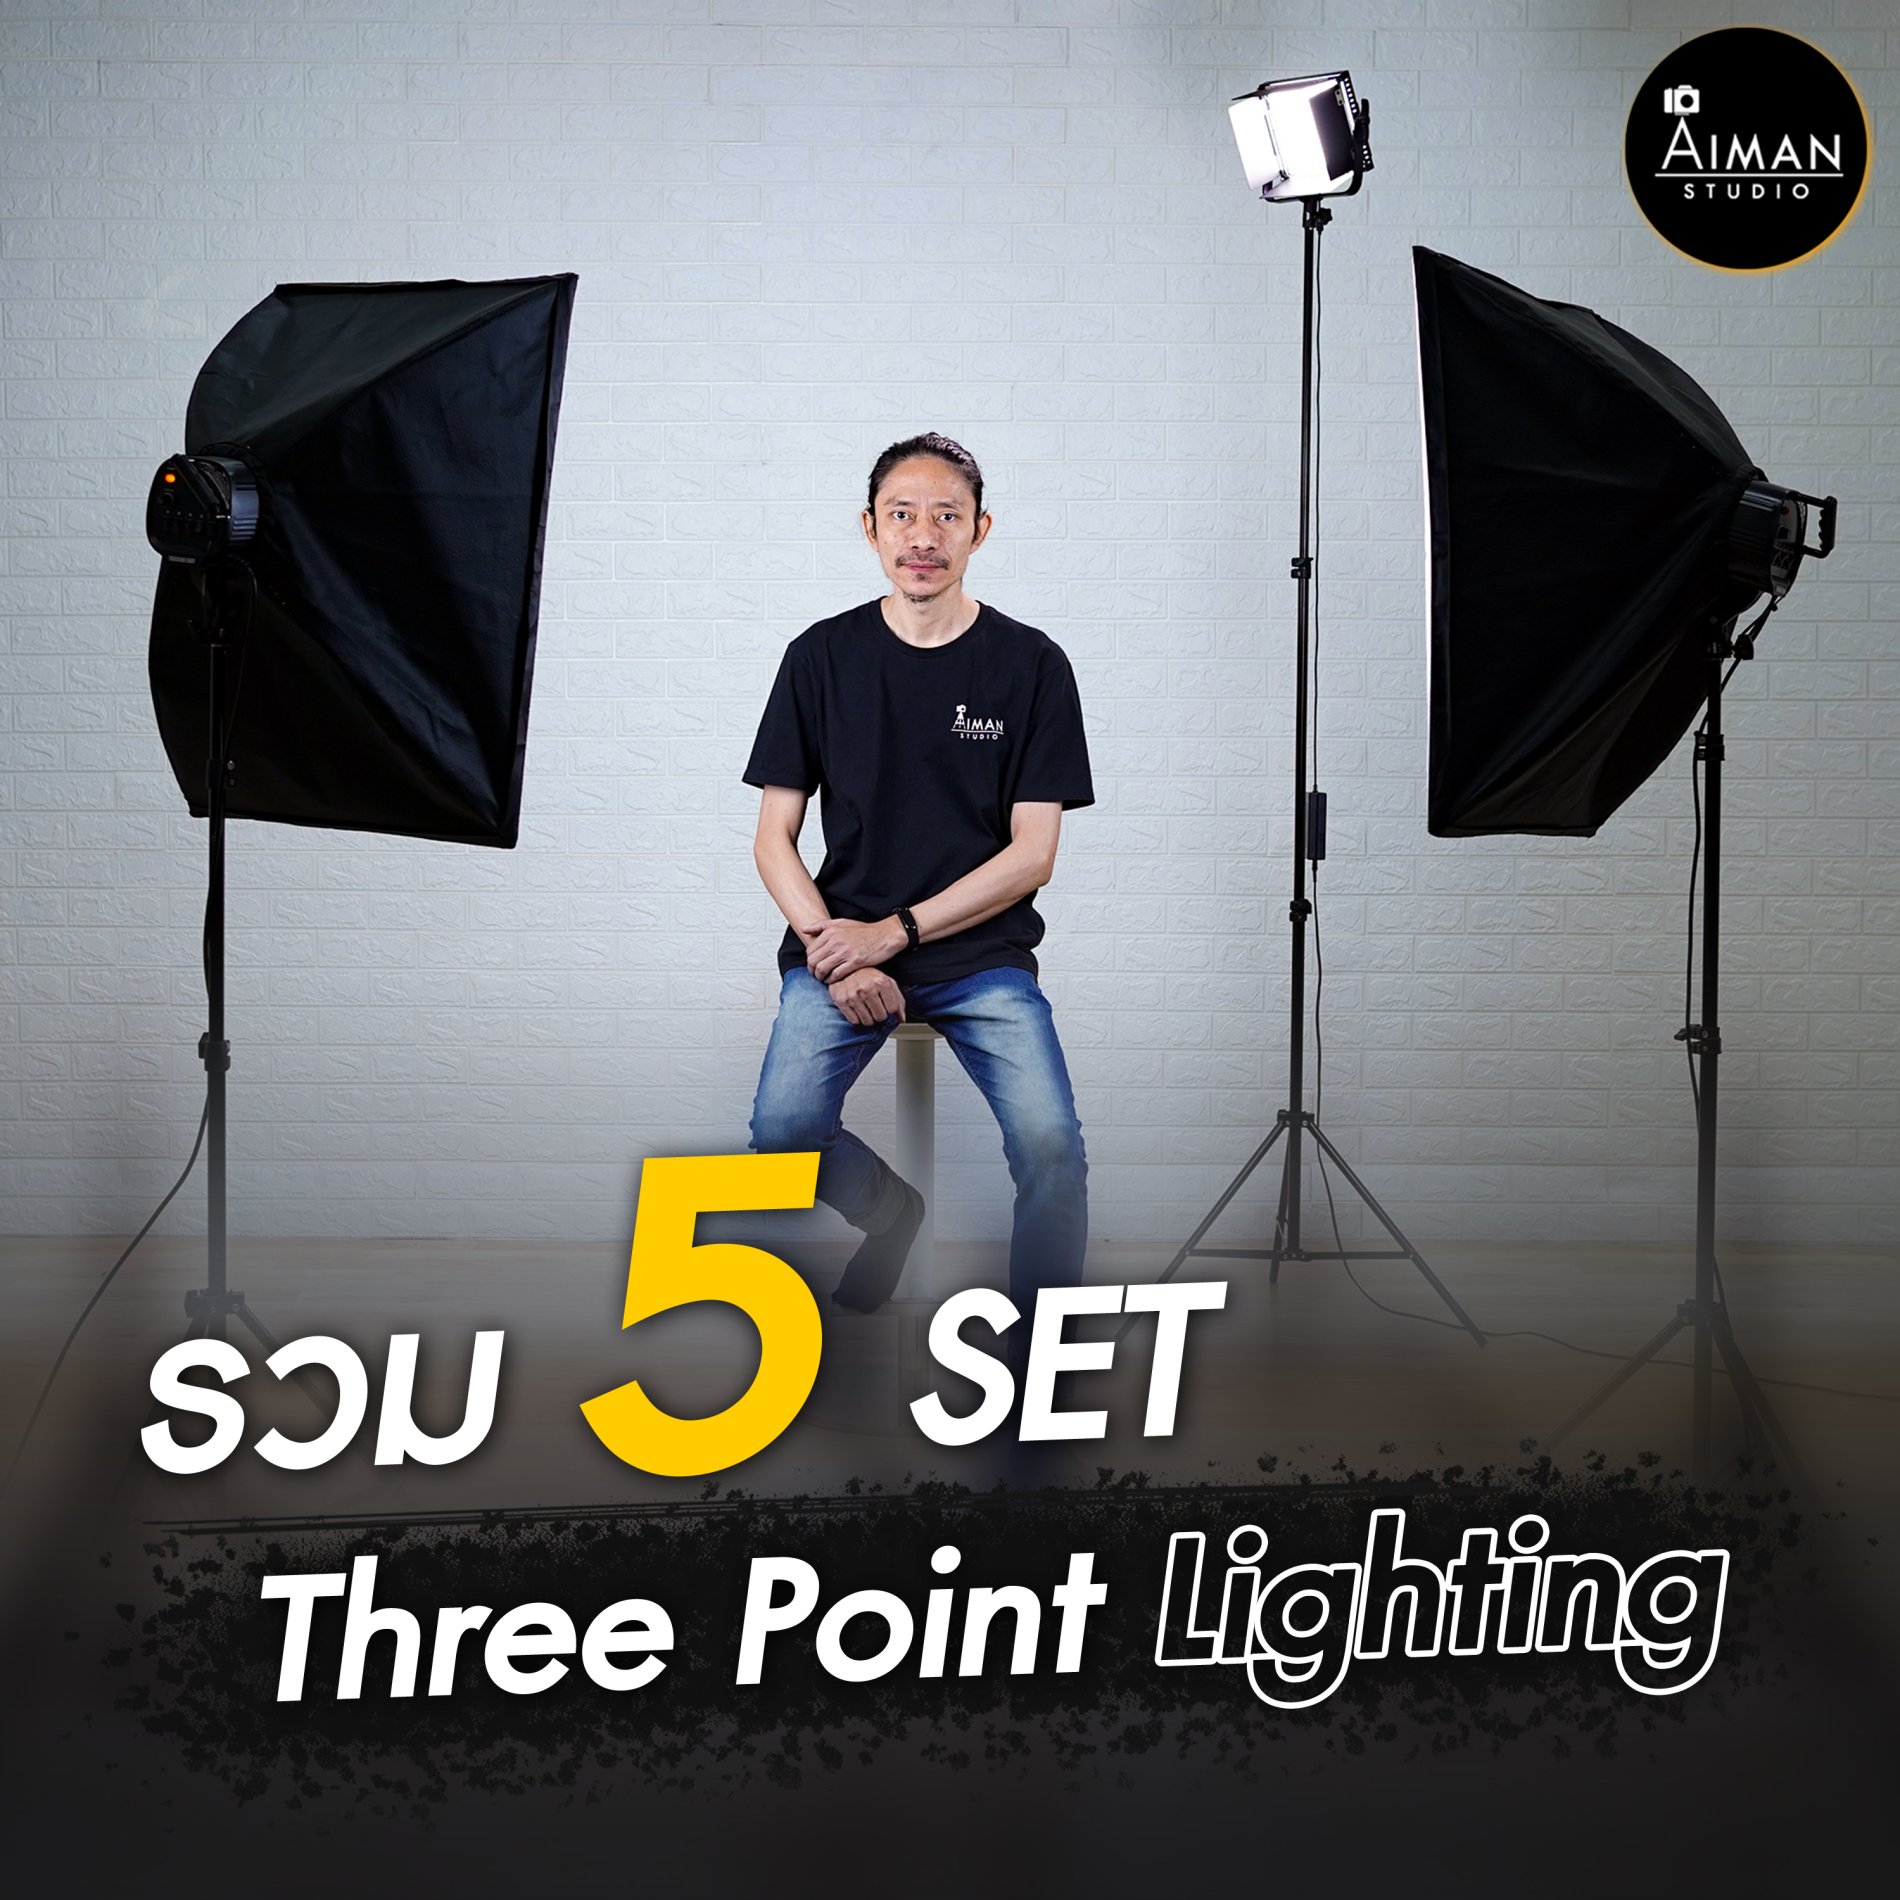 5 set 3 Point Lighting